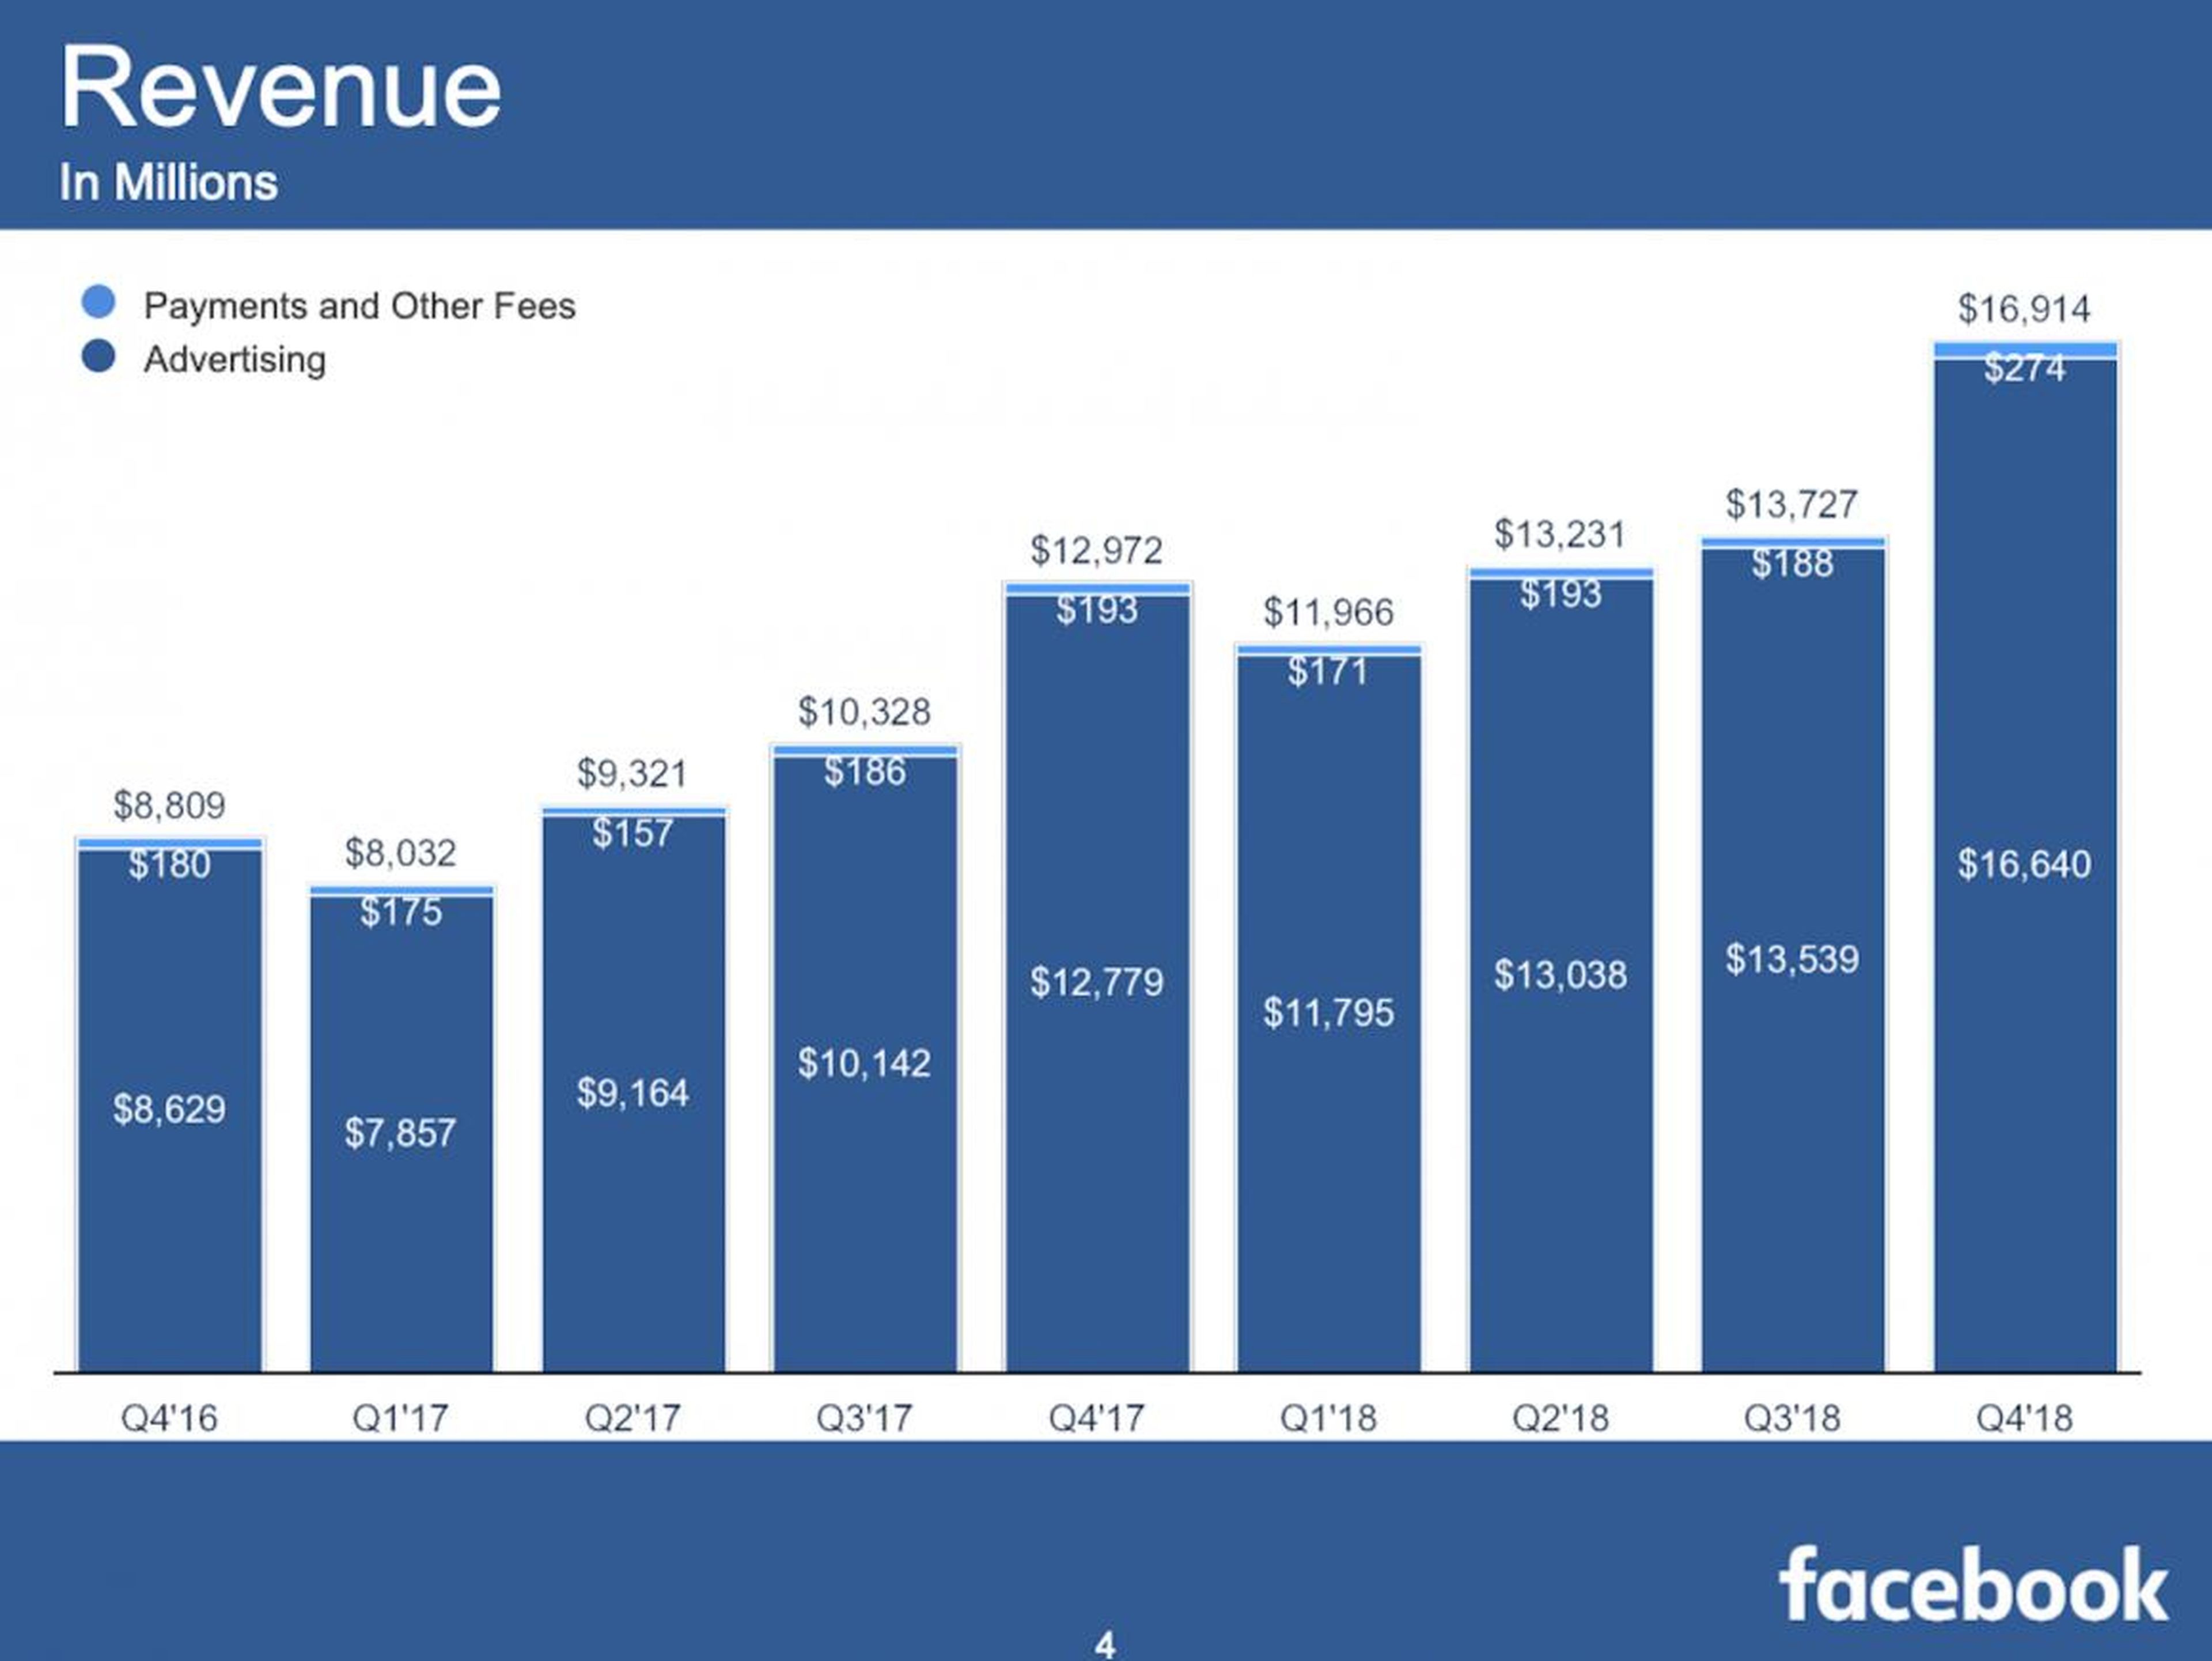 Facebook's quarterly revenue over the last several quarters.